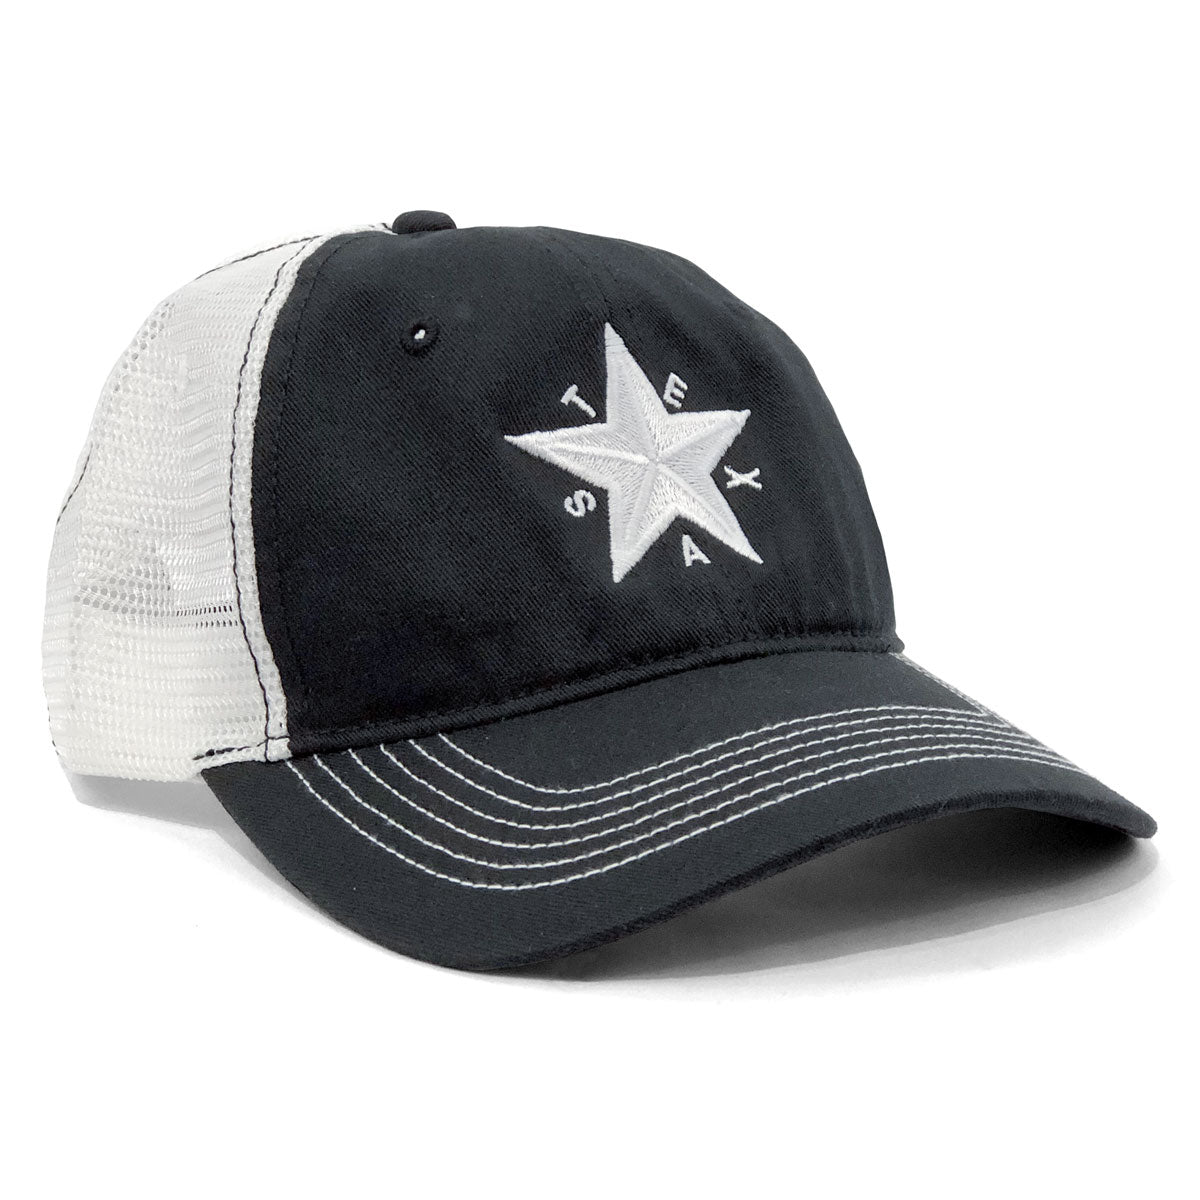 Republic of Texas Star Cap